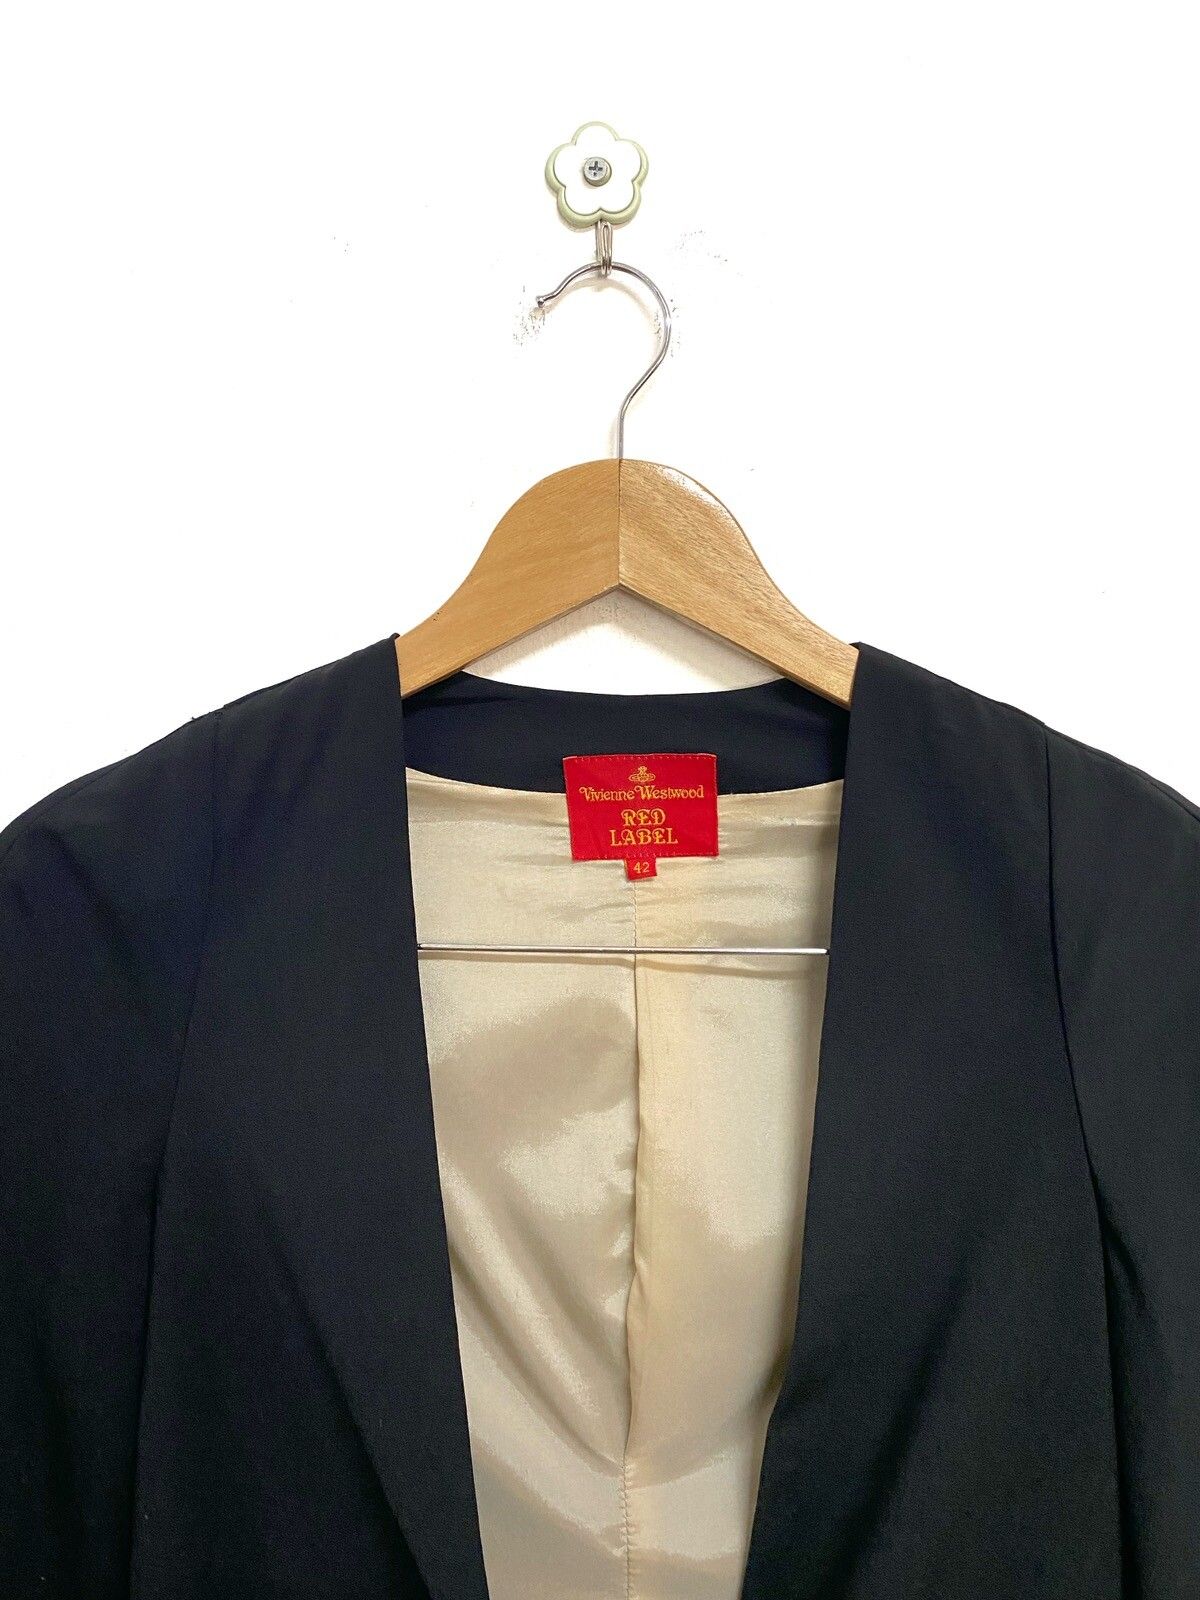 Vivienne Westwood Red Label Blazer Jacket Made in Italy - 3